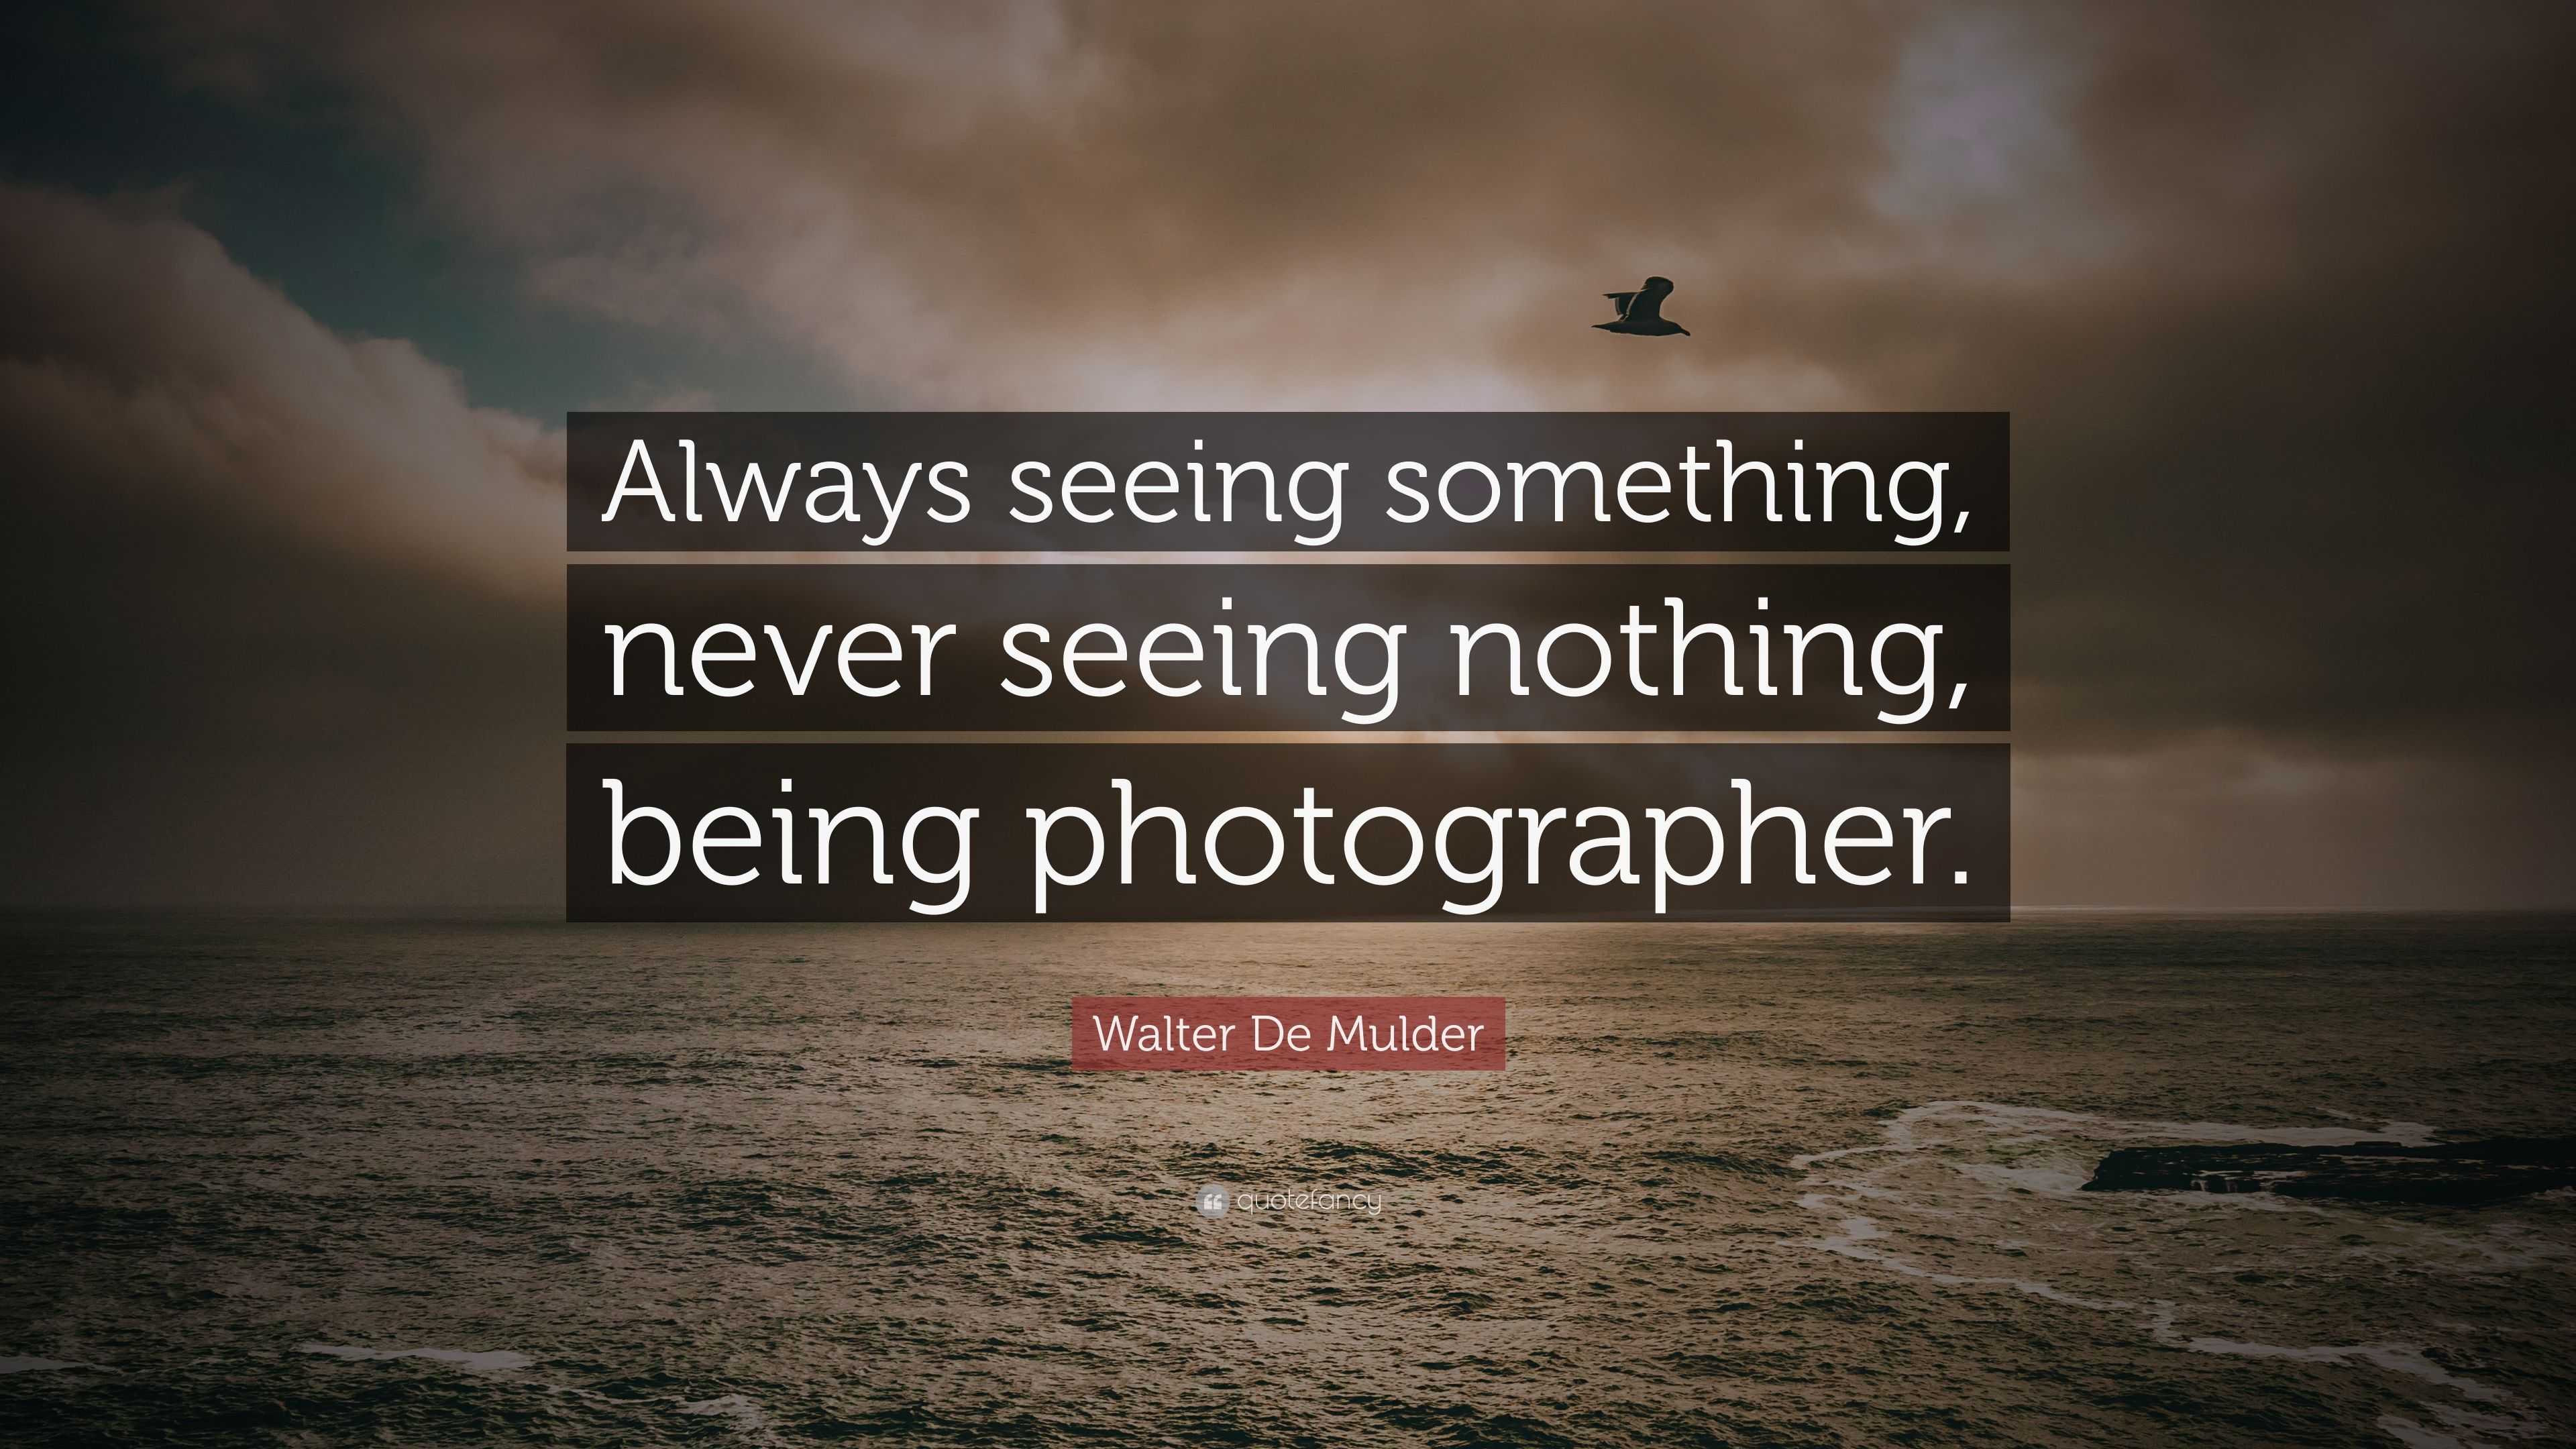 Walter De Mulder Quote: “Always seeing something, never seeing nothing ...